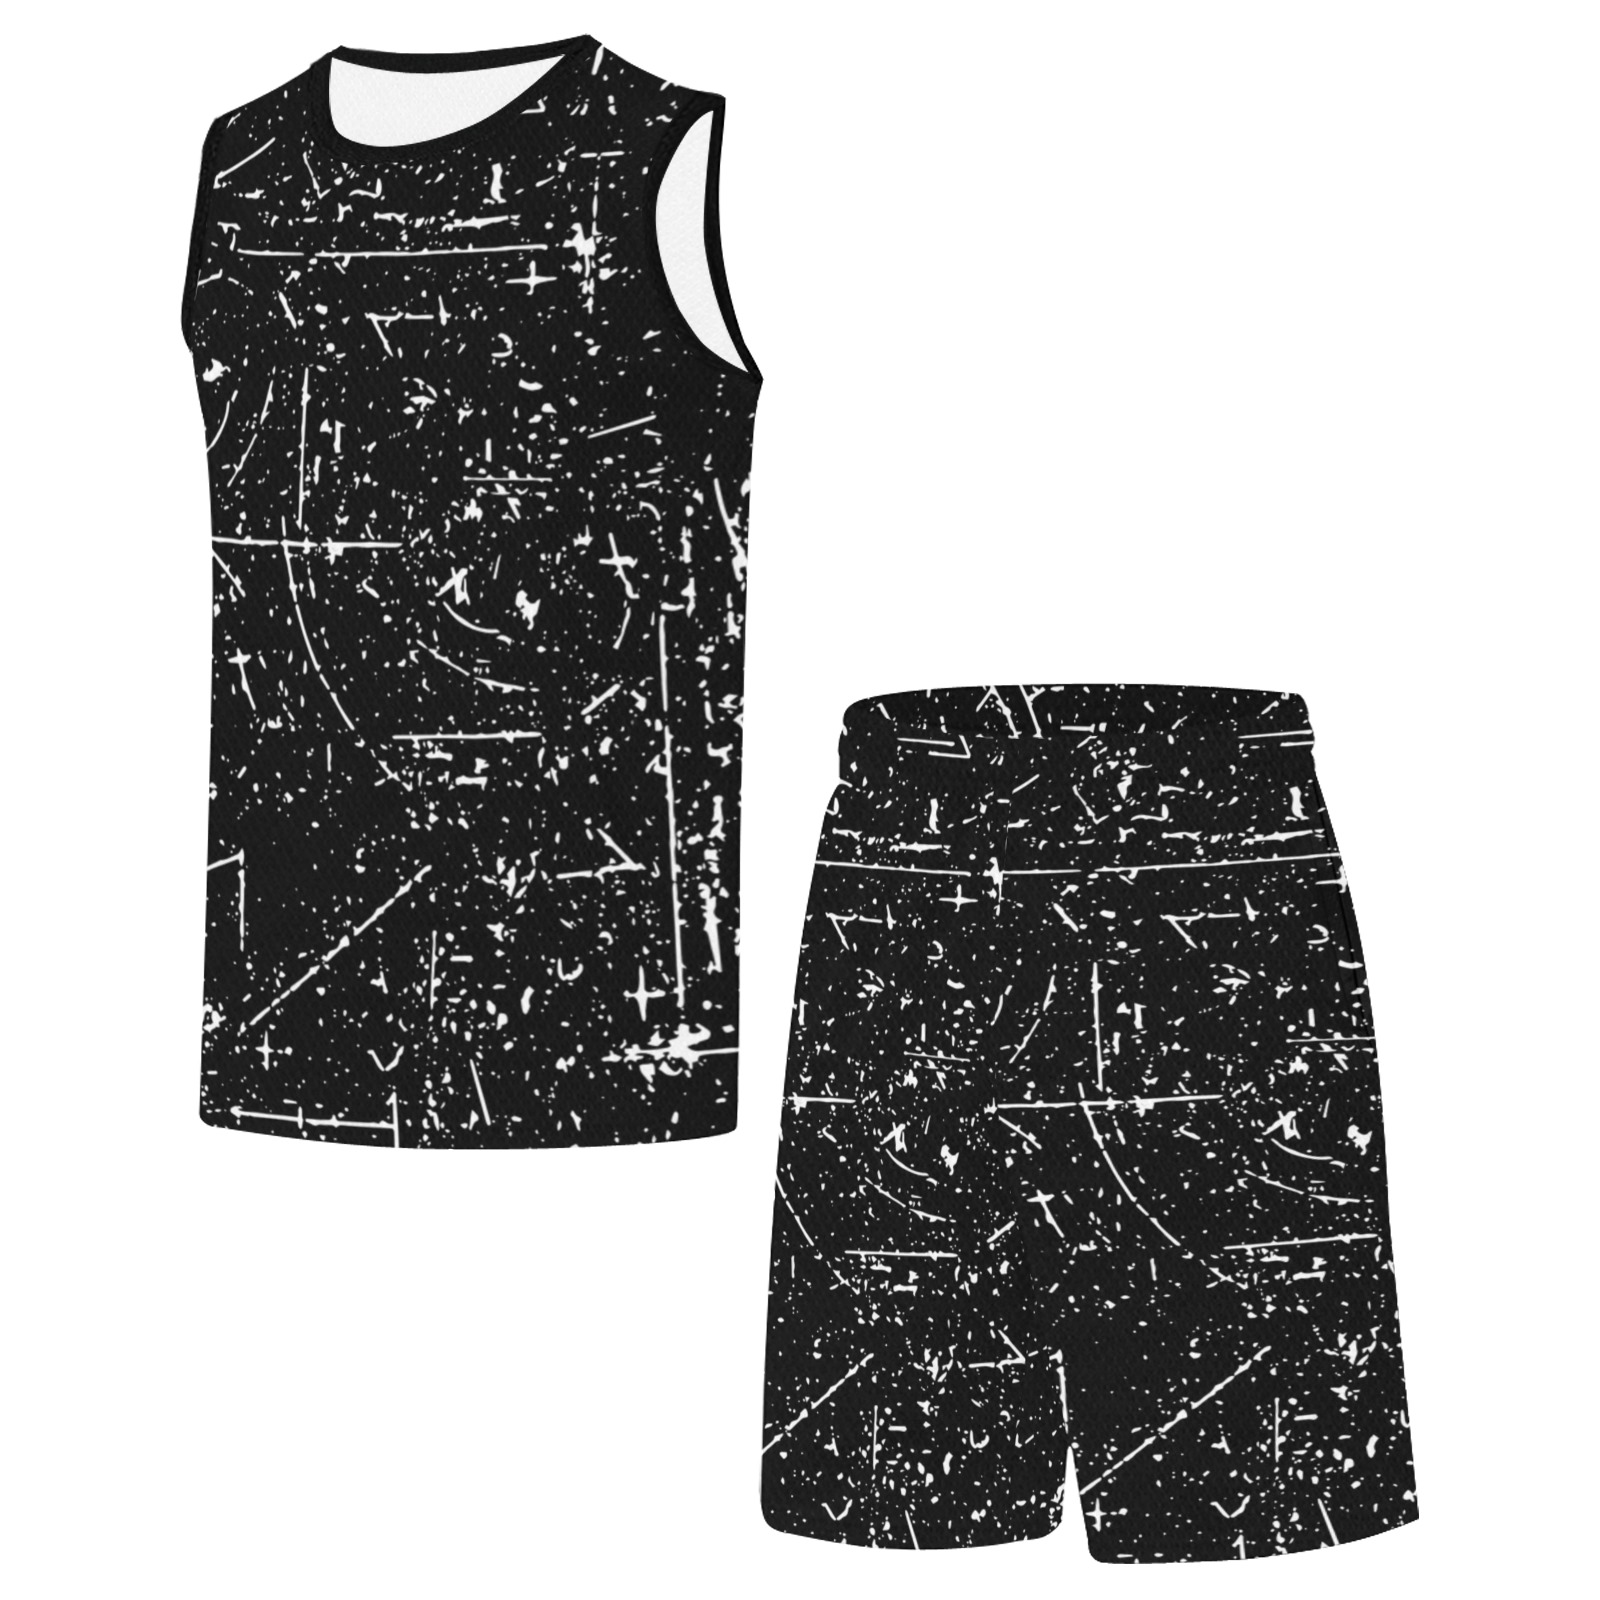 Black Board Basketball Uniform with Pocket